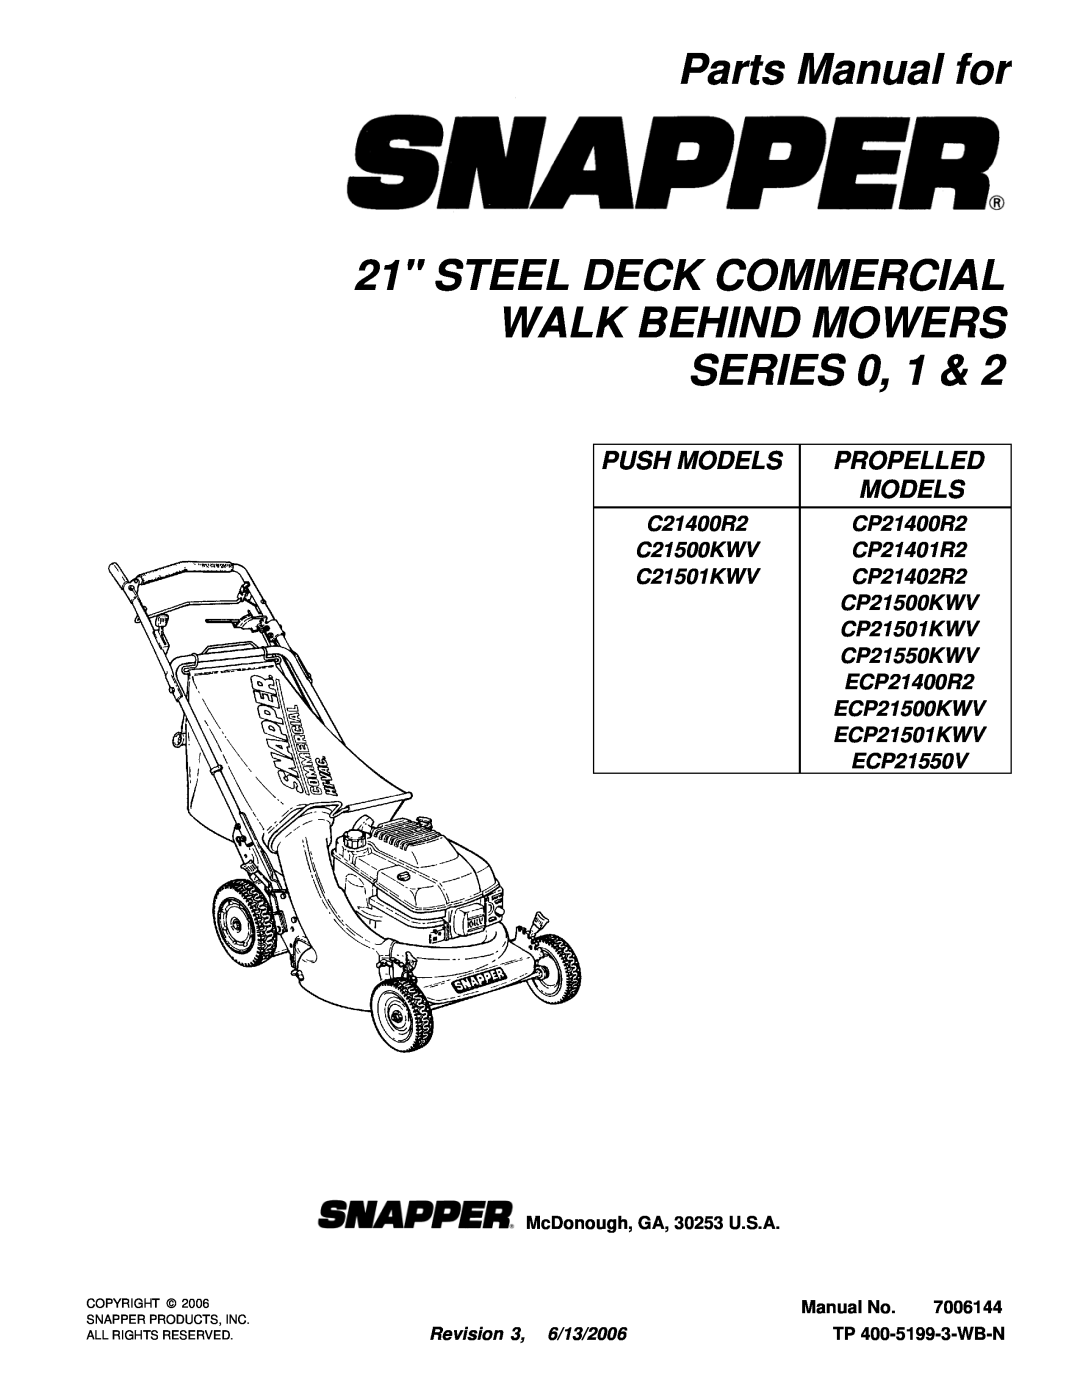 Snapper CP21500KWV manual Parts Manual for, STEEL DECK COMMERCIAL WALK BEHIND MOWERS SERIES 0, 1, Push Models, Manual No 